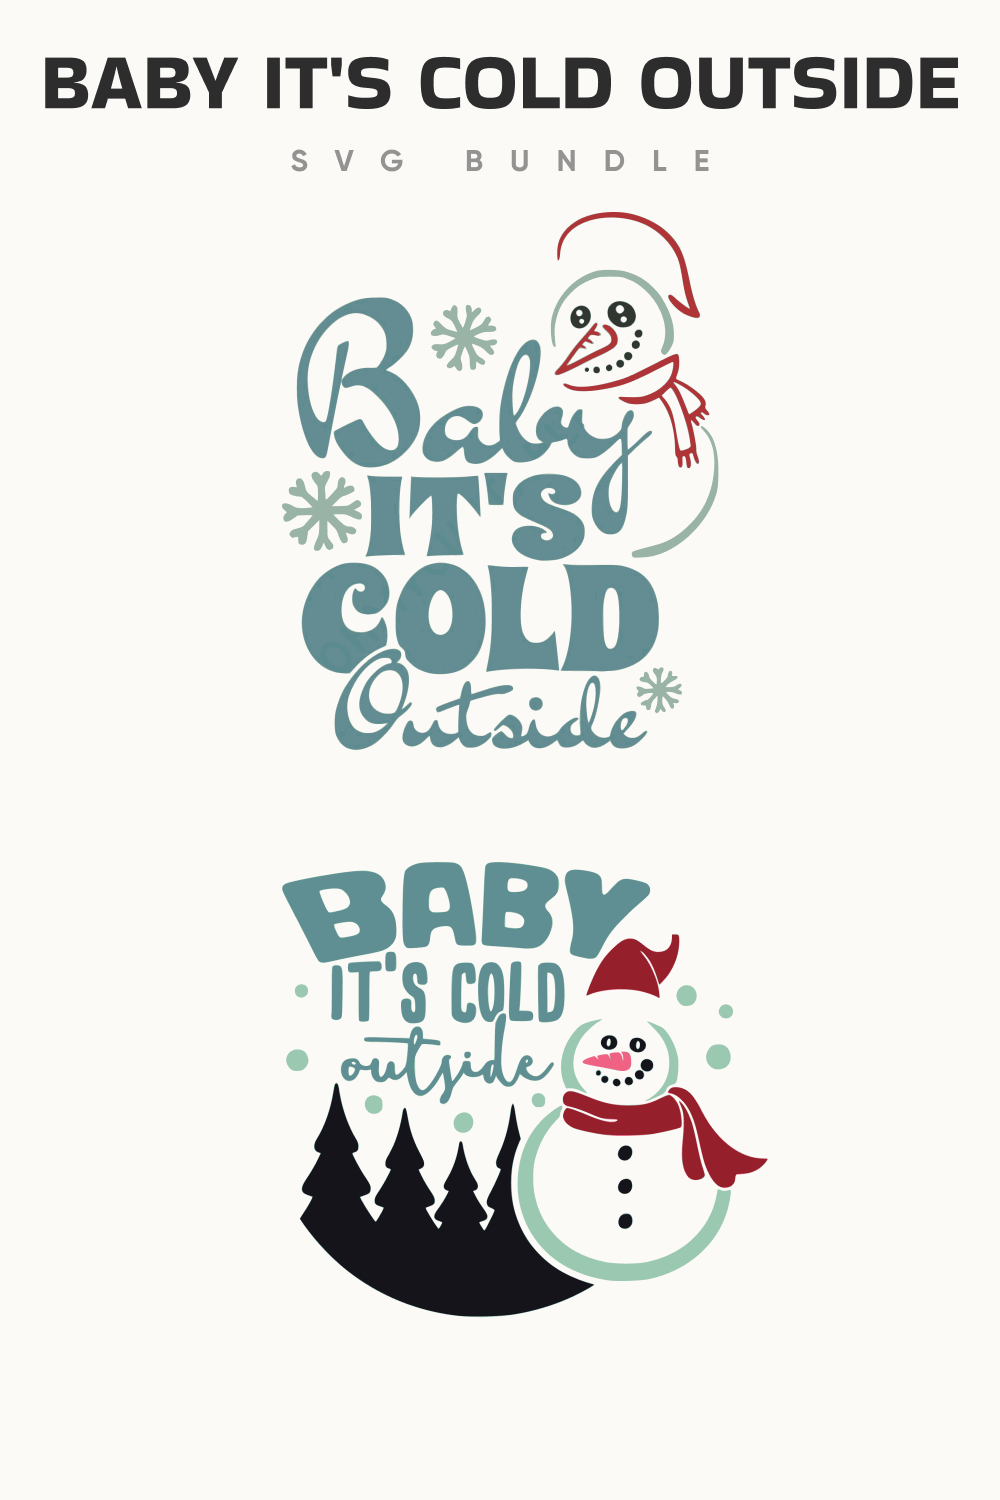 High quality baby snowmen illustration.